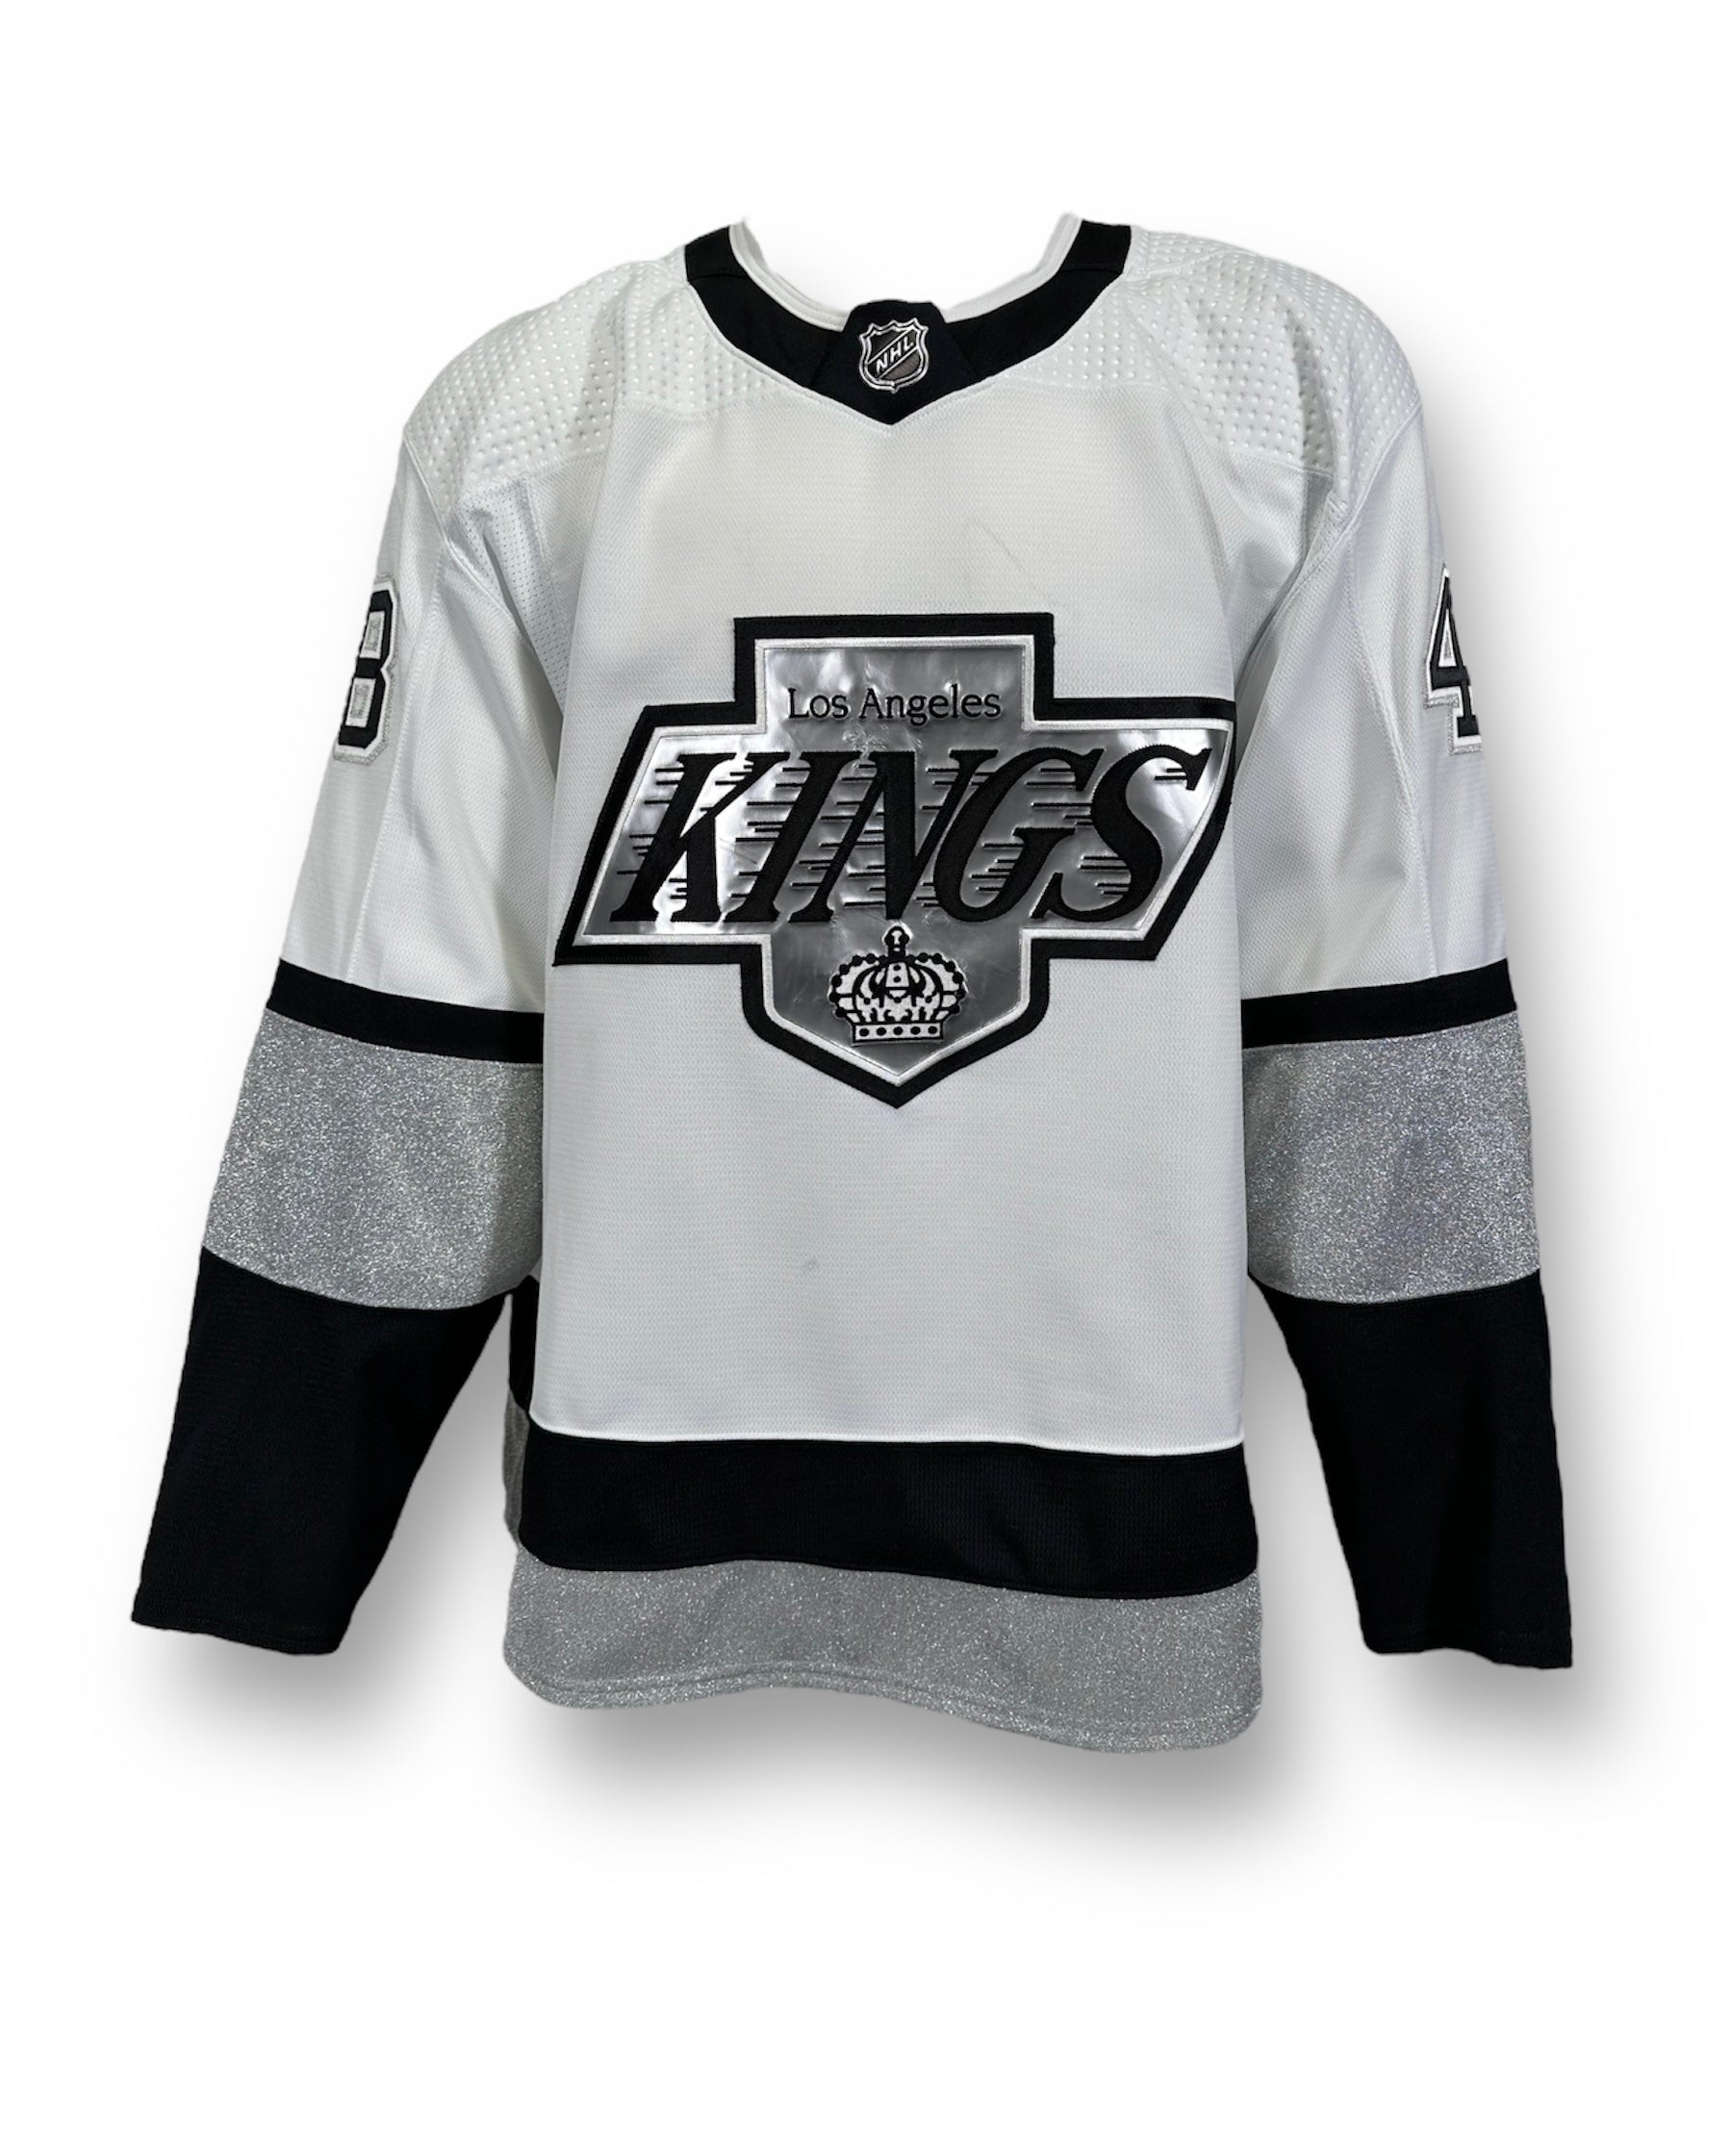 Kings Uniform History  Kings hockey, Hockey clothes, Hockey pictures